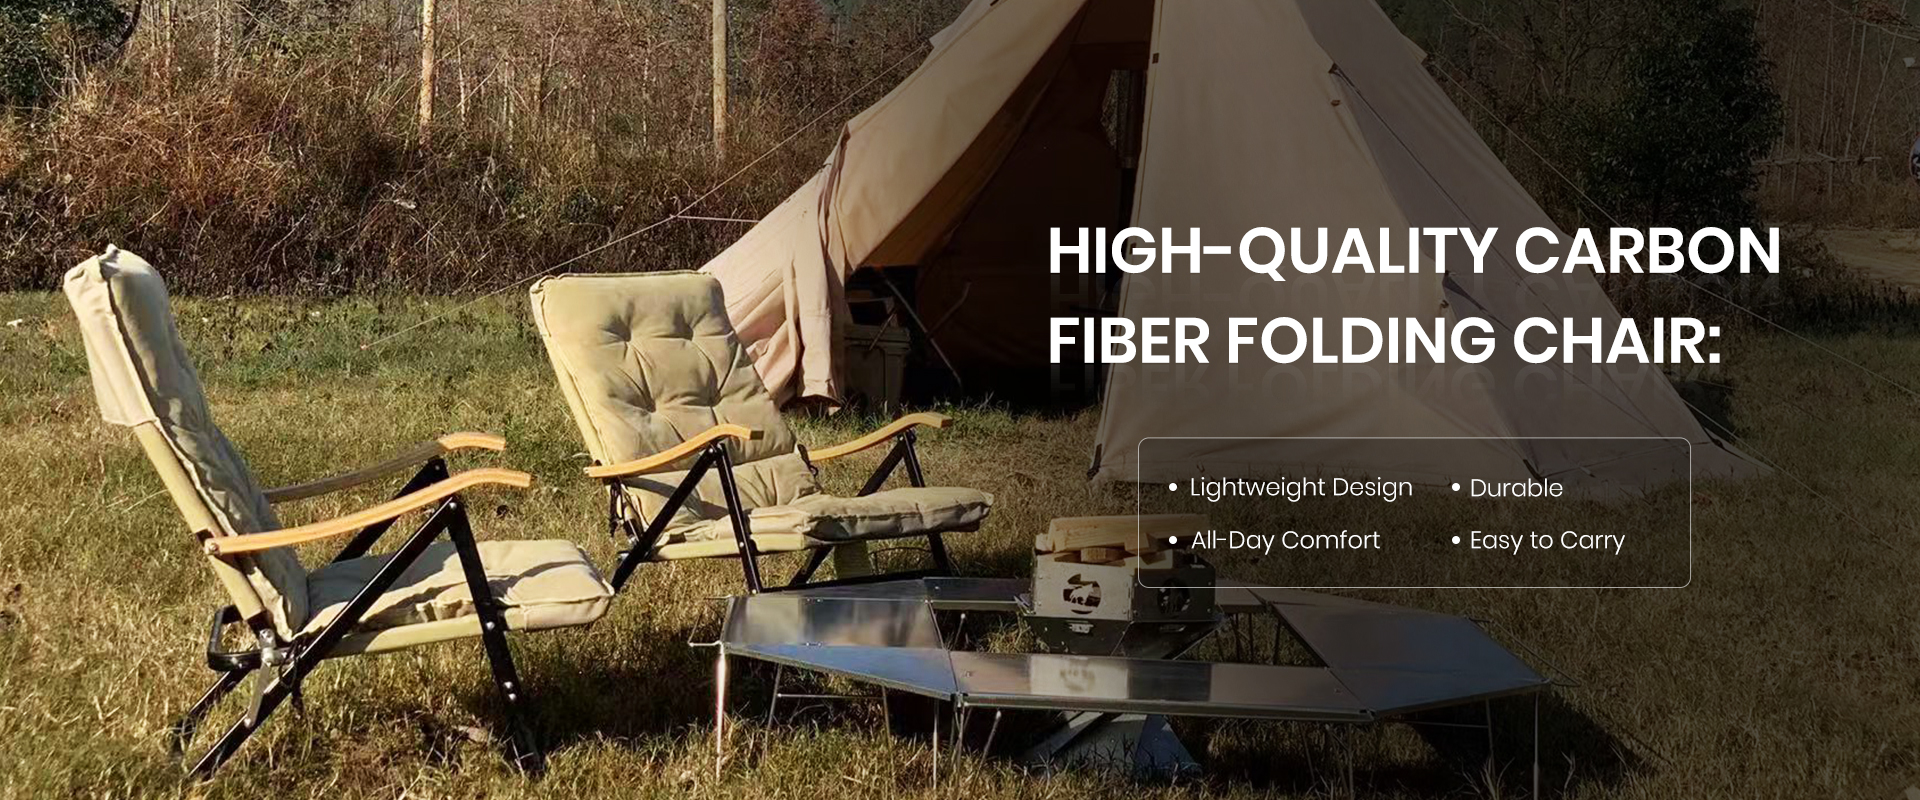 High- Quality Carbon Fiber Folding Chair